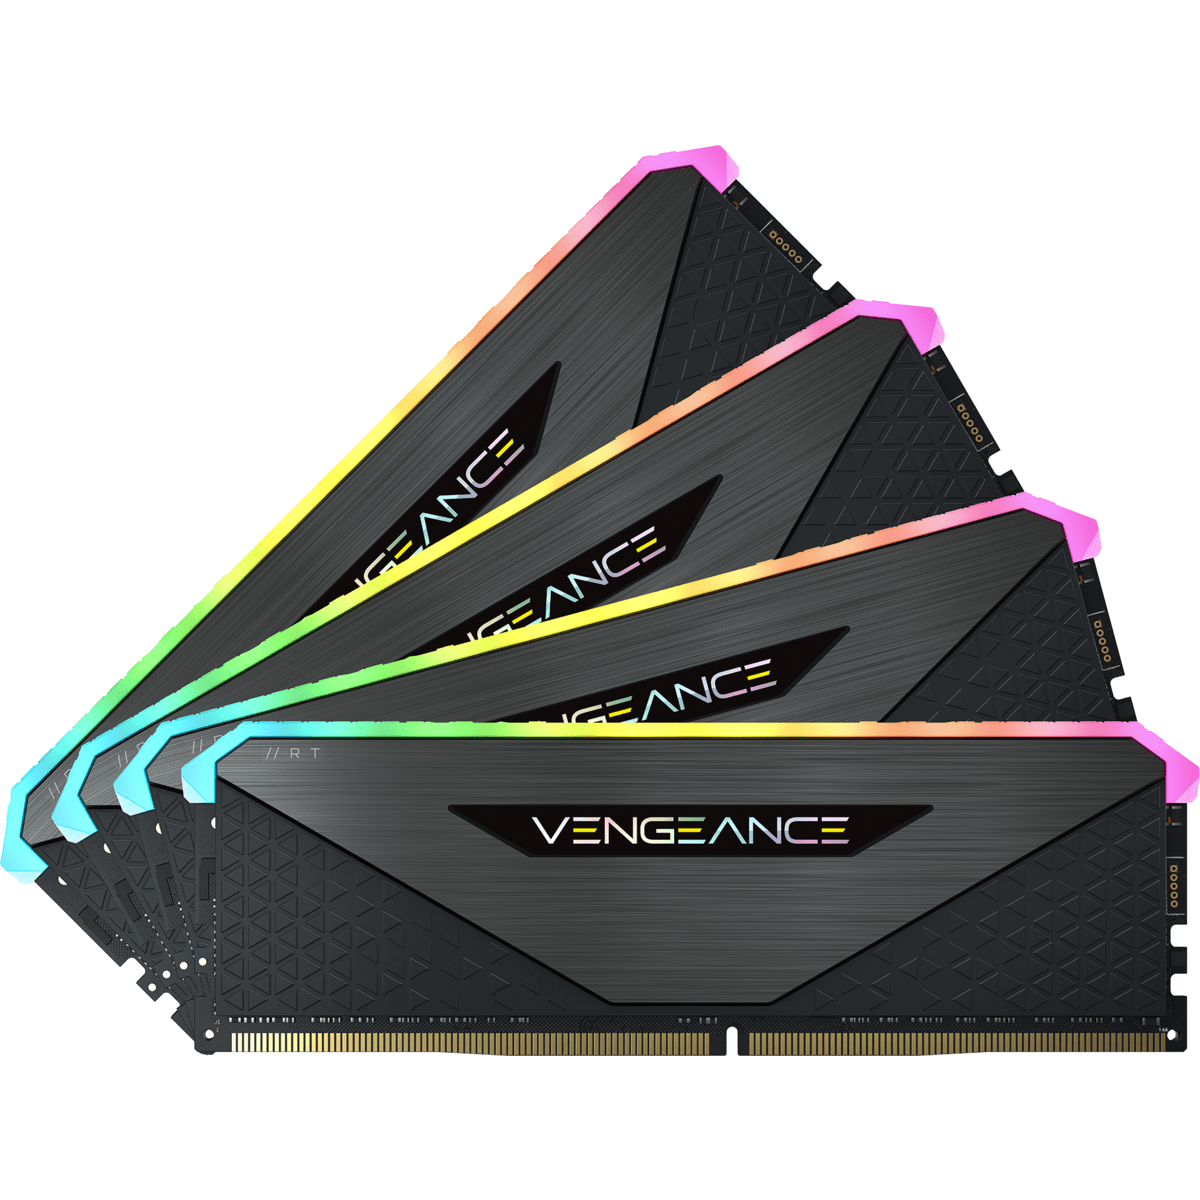 64 Black AMD 1.35V, 18-22-22-42 4x16GB, Speicher-Kit CORSAIR GB DDR4